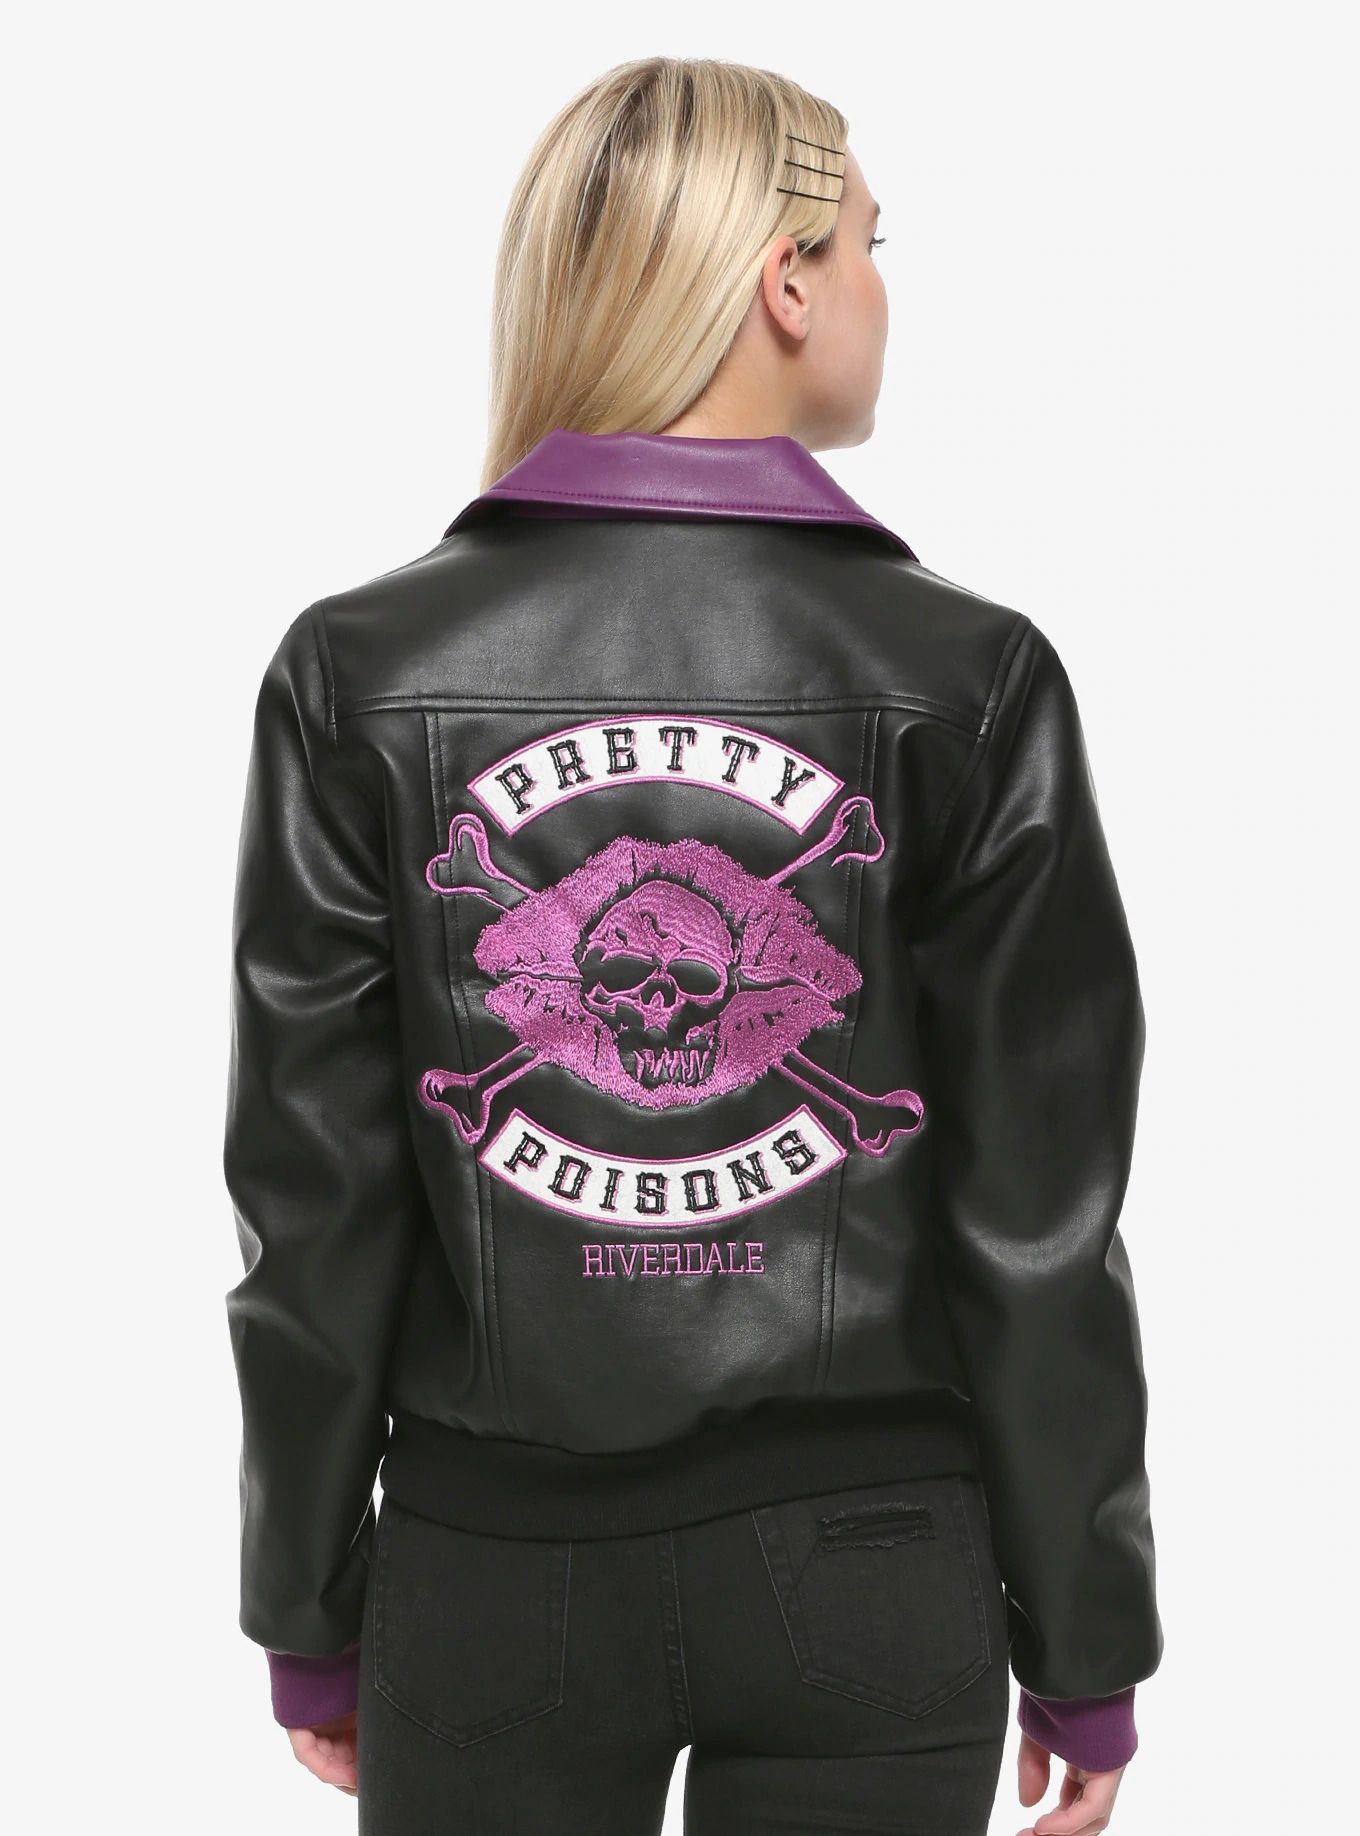 Pretty Poisons Leather Jacket Riverdale. Purple leather jacket